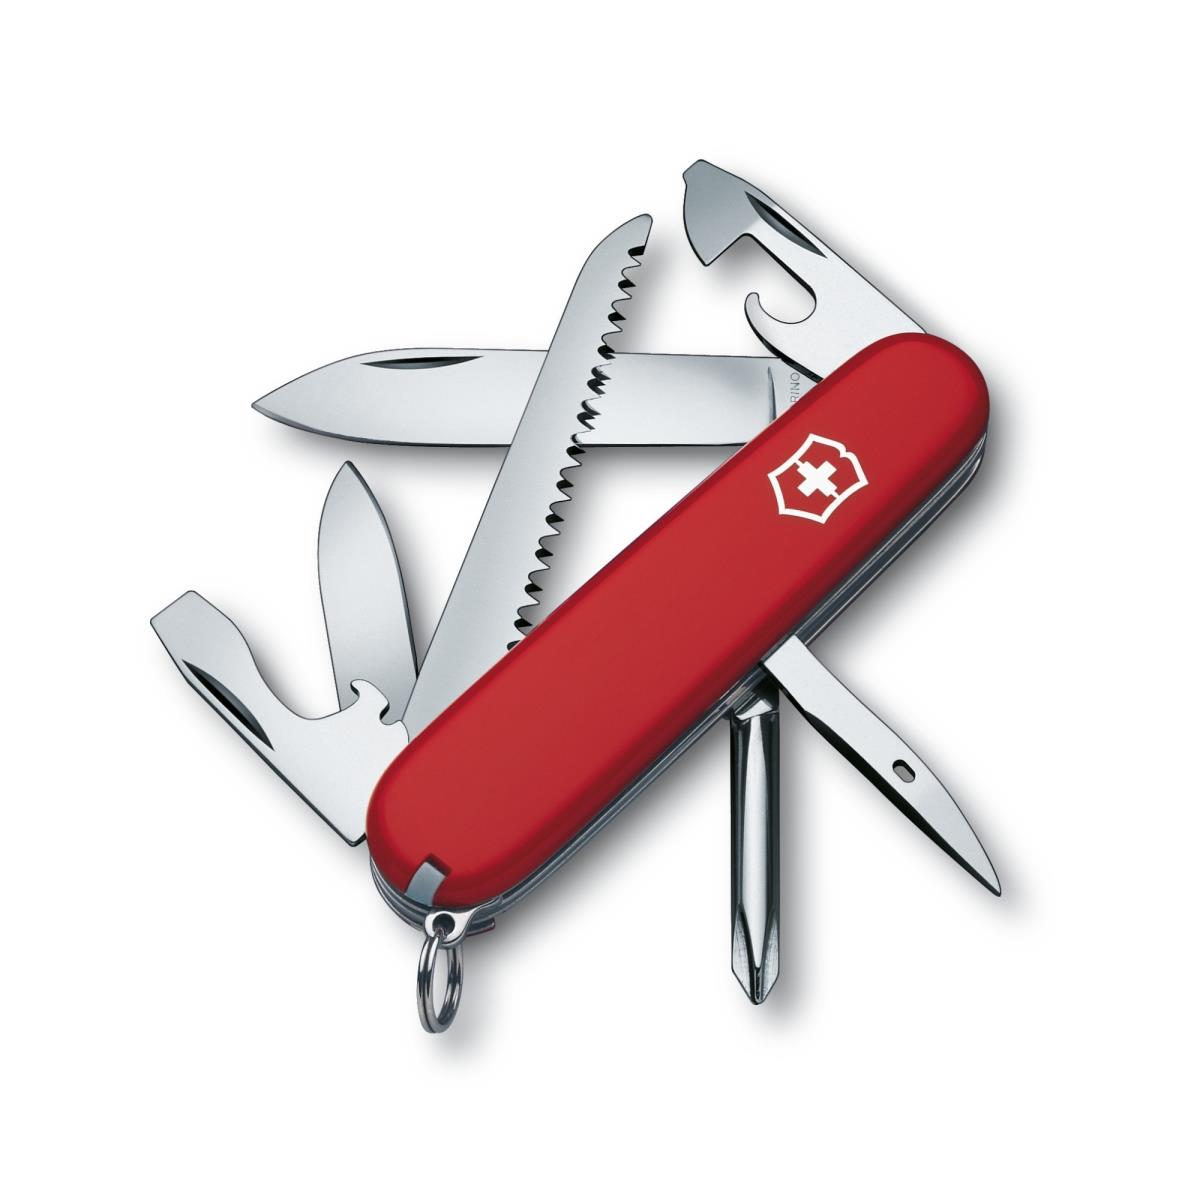 Нож 1.4613 Hiker (91mm) VICTORINOX нож перочинный victorinox hiker 1 4613 91мм 13 функций красный